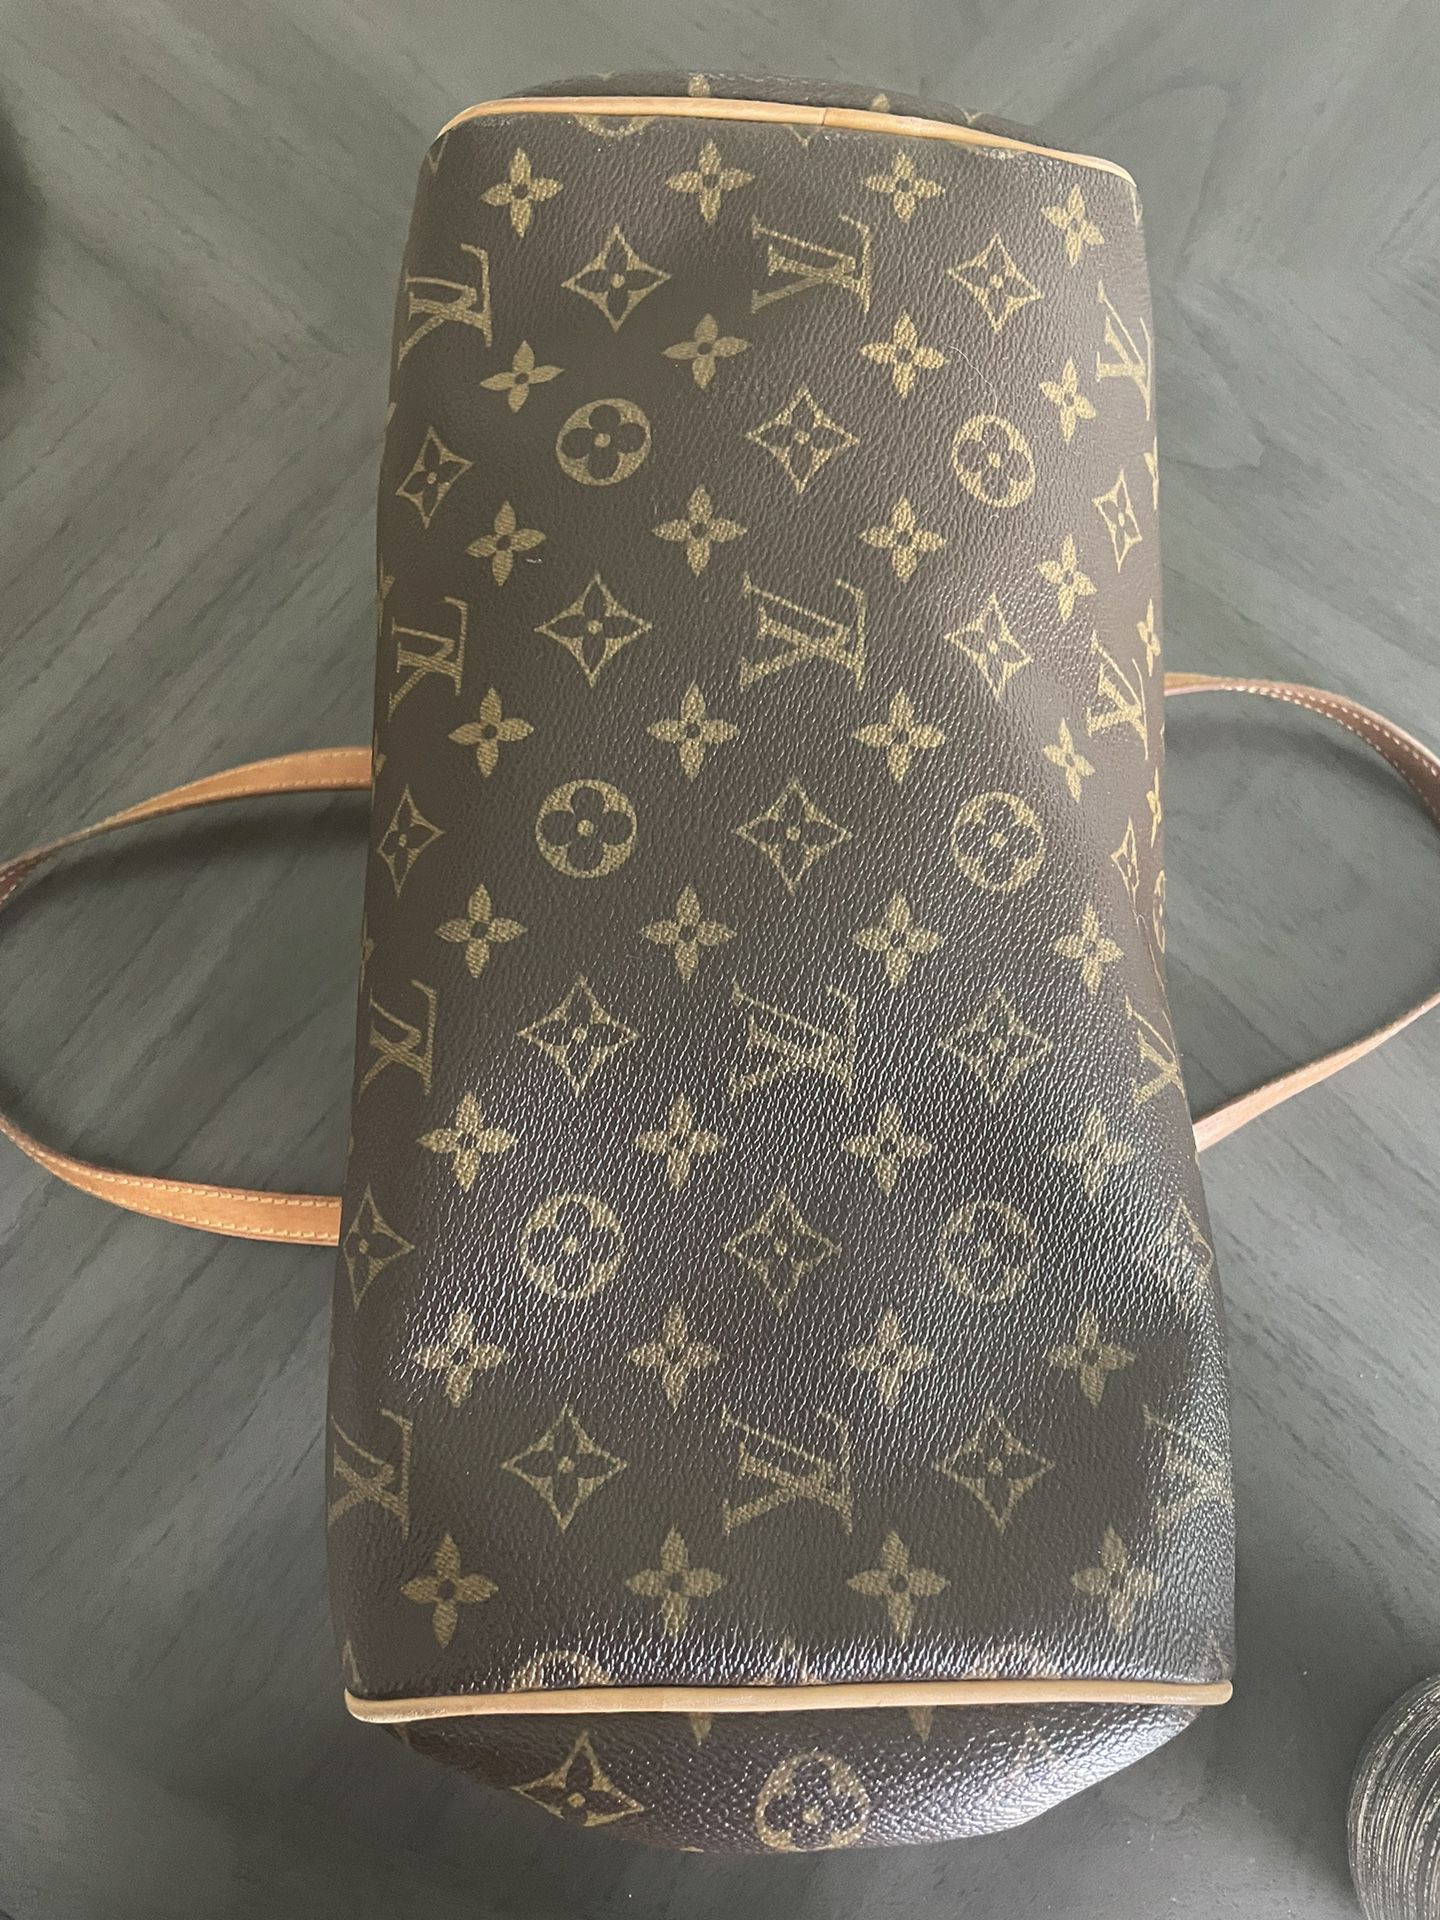 Louis Vuitton Montorgueil Pm Monogram Shoulder Bag for Sale in Sunnyvale,  CA - OfferUp